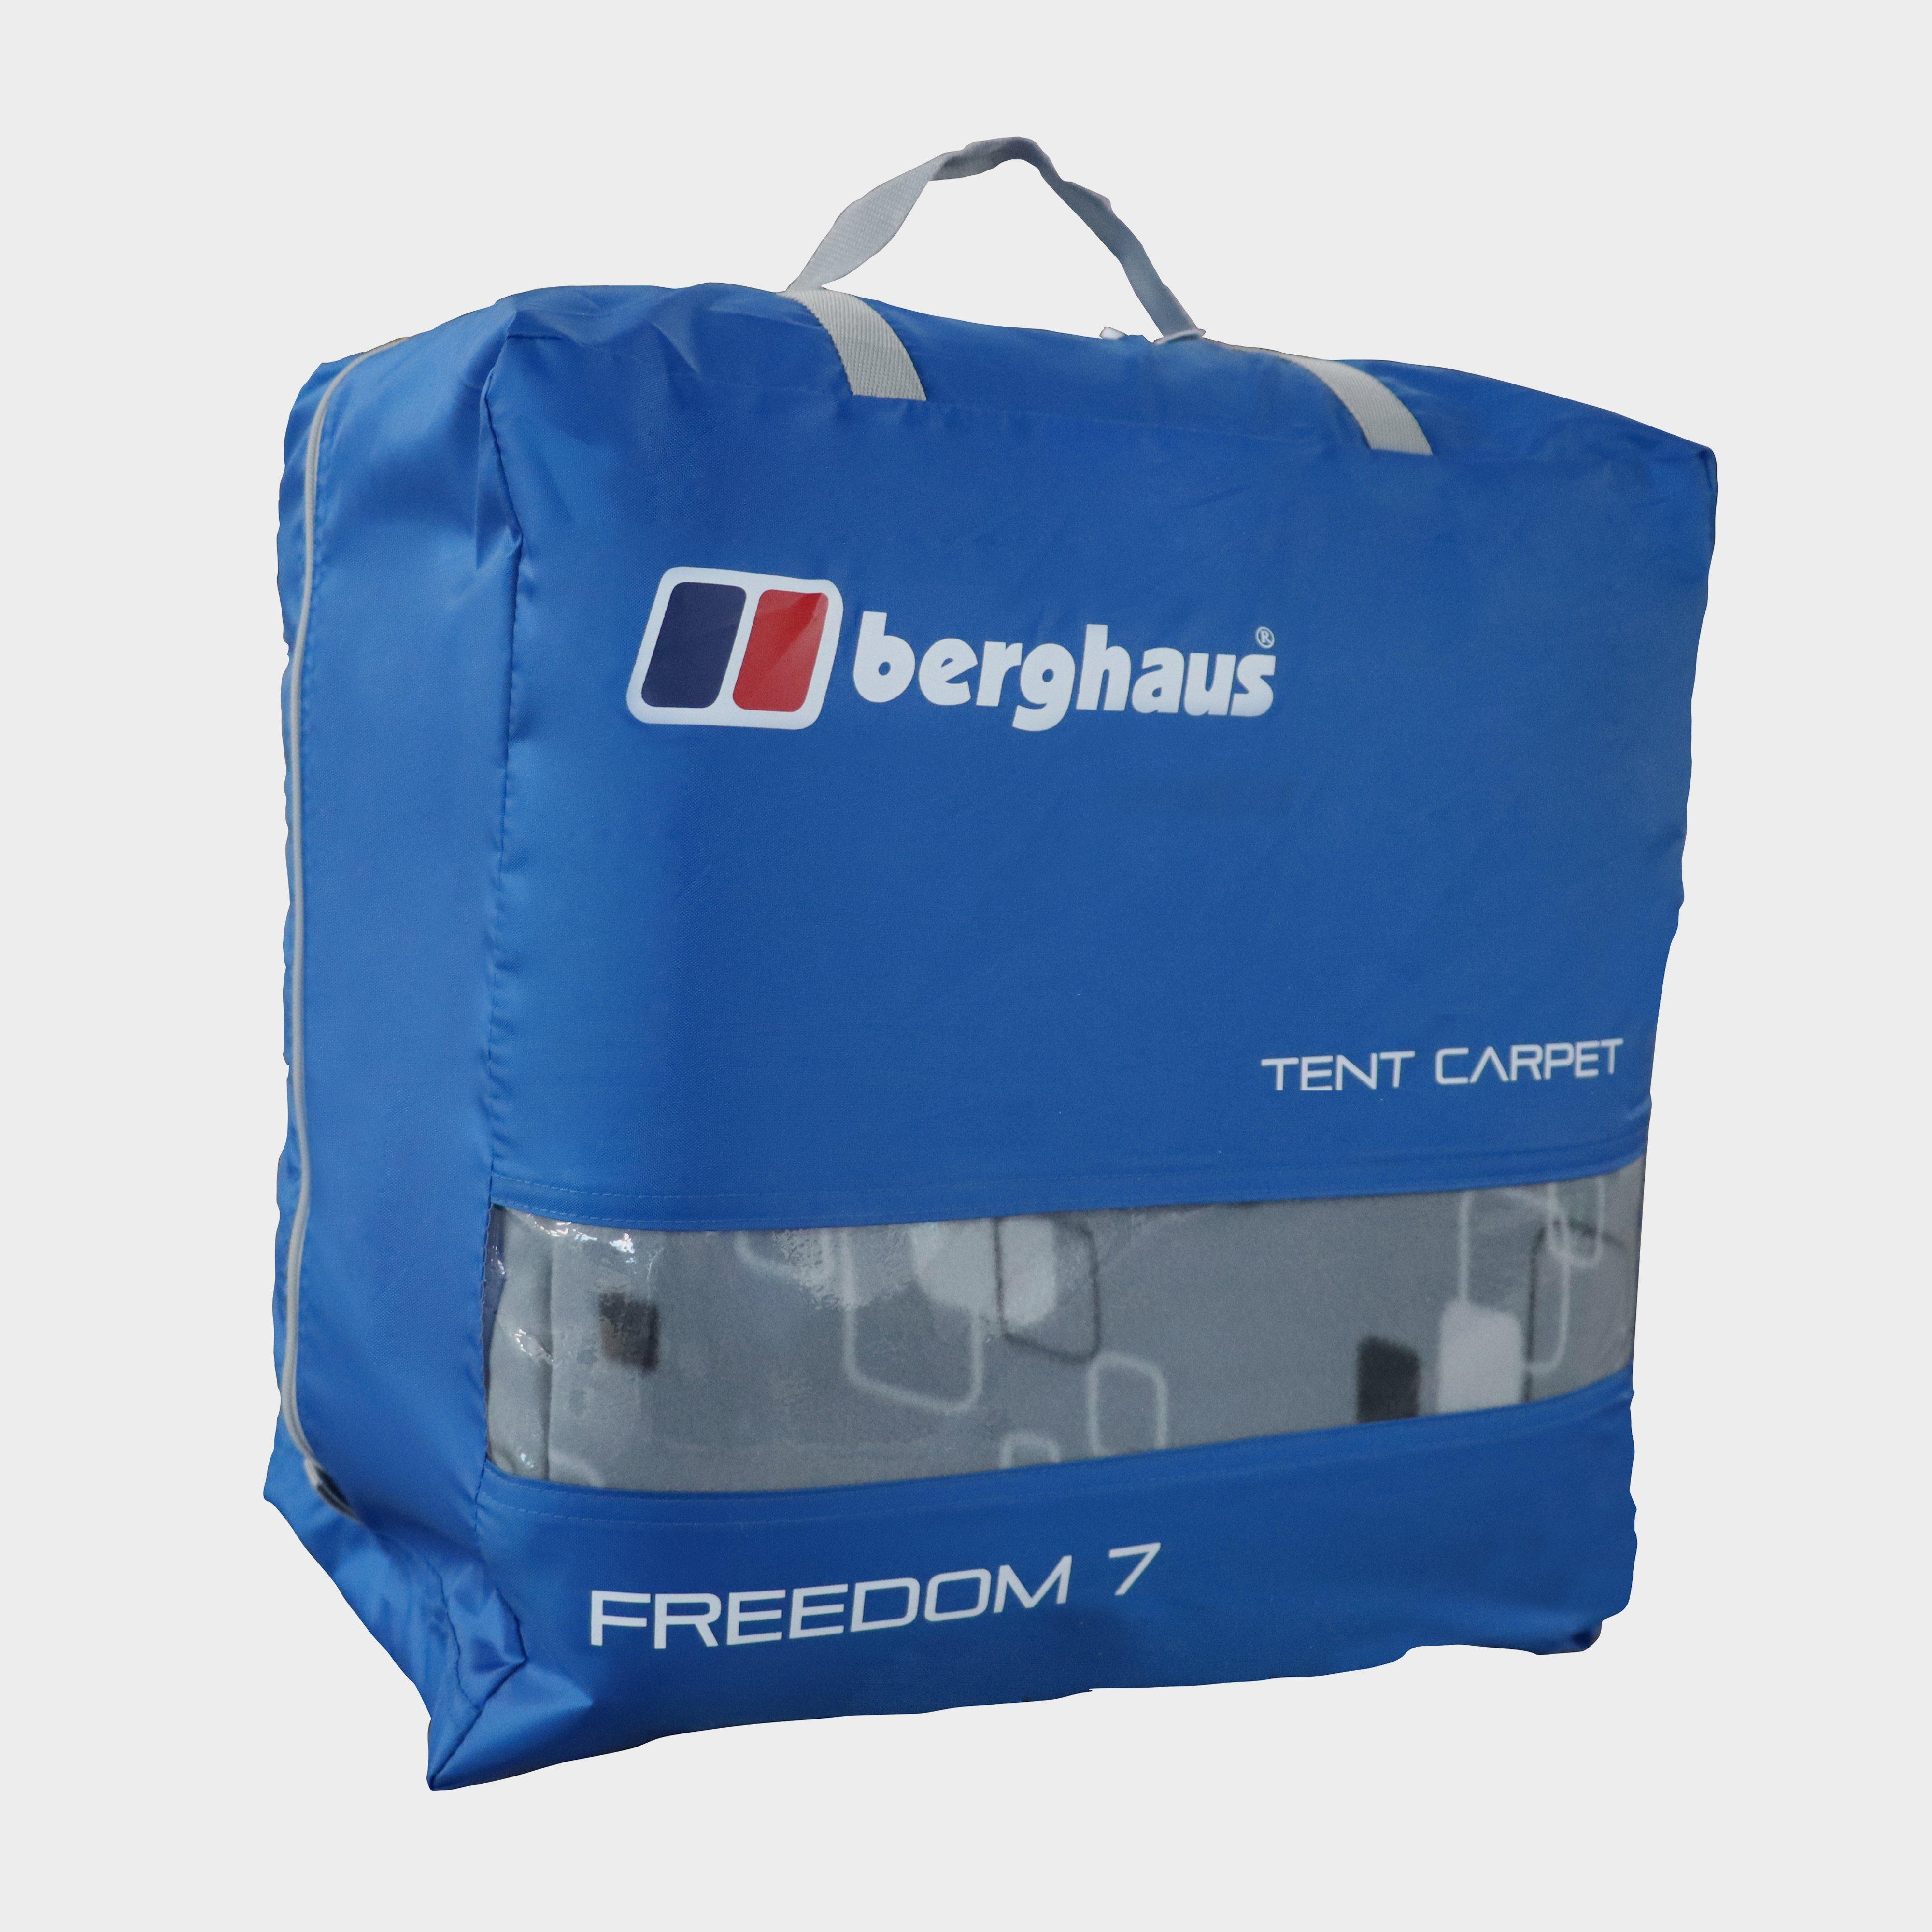 Berghaus Freedom 7 Tent Carpet - Grey/grey  Grey/grey